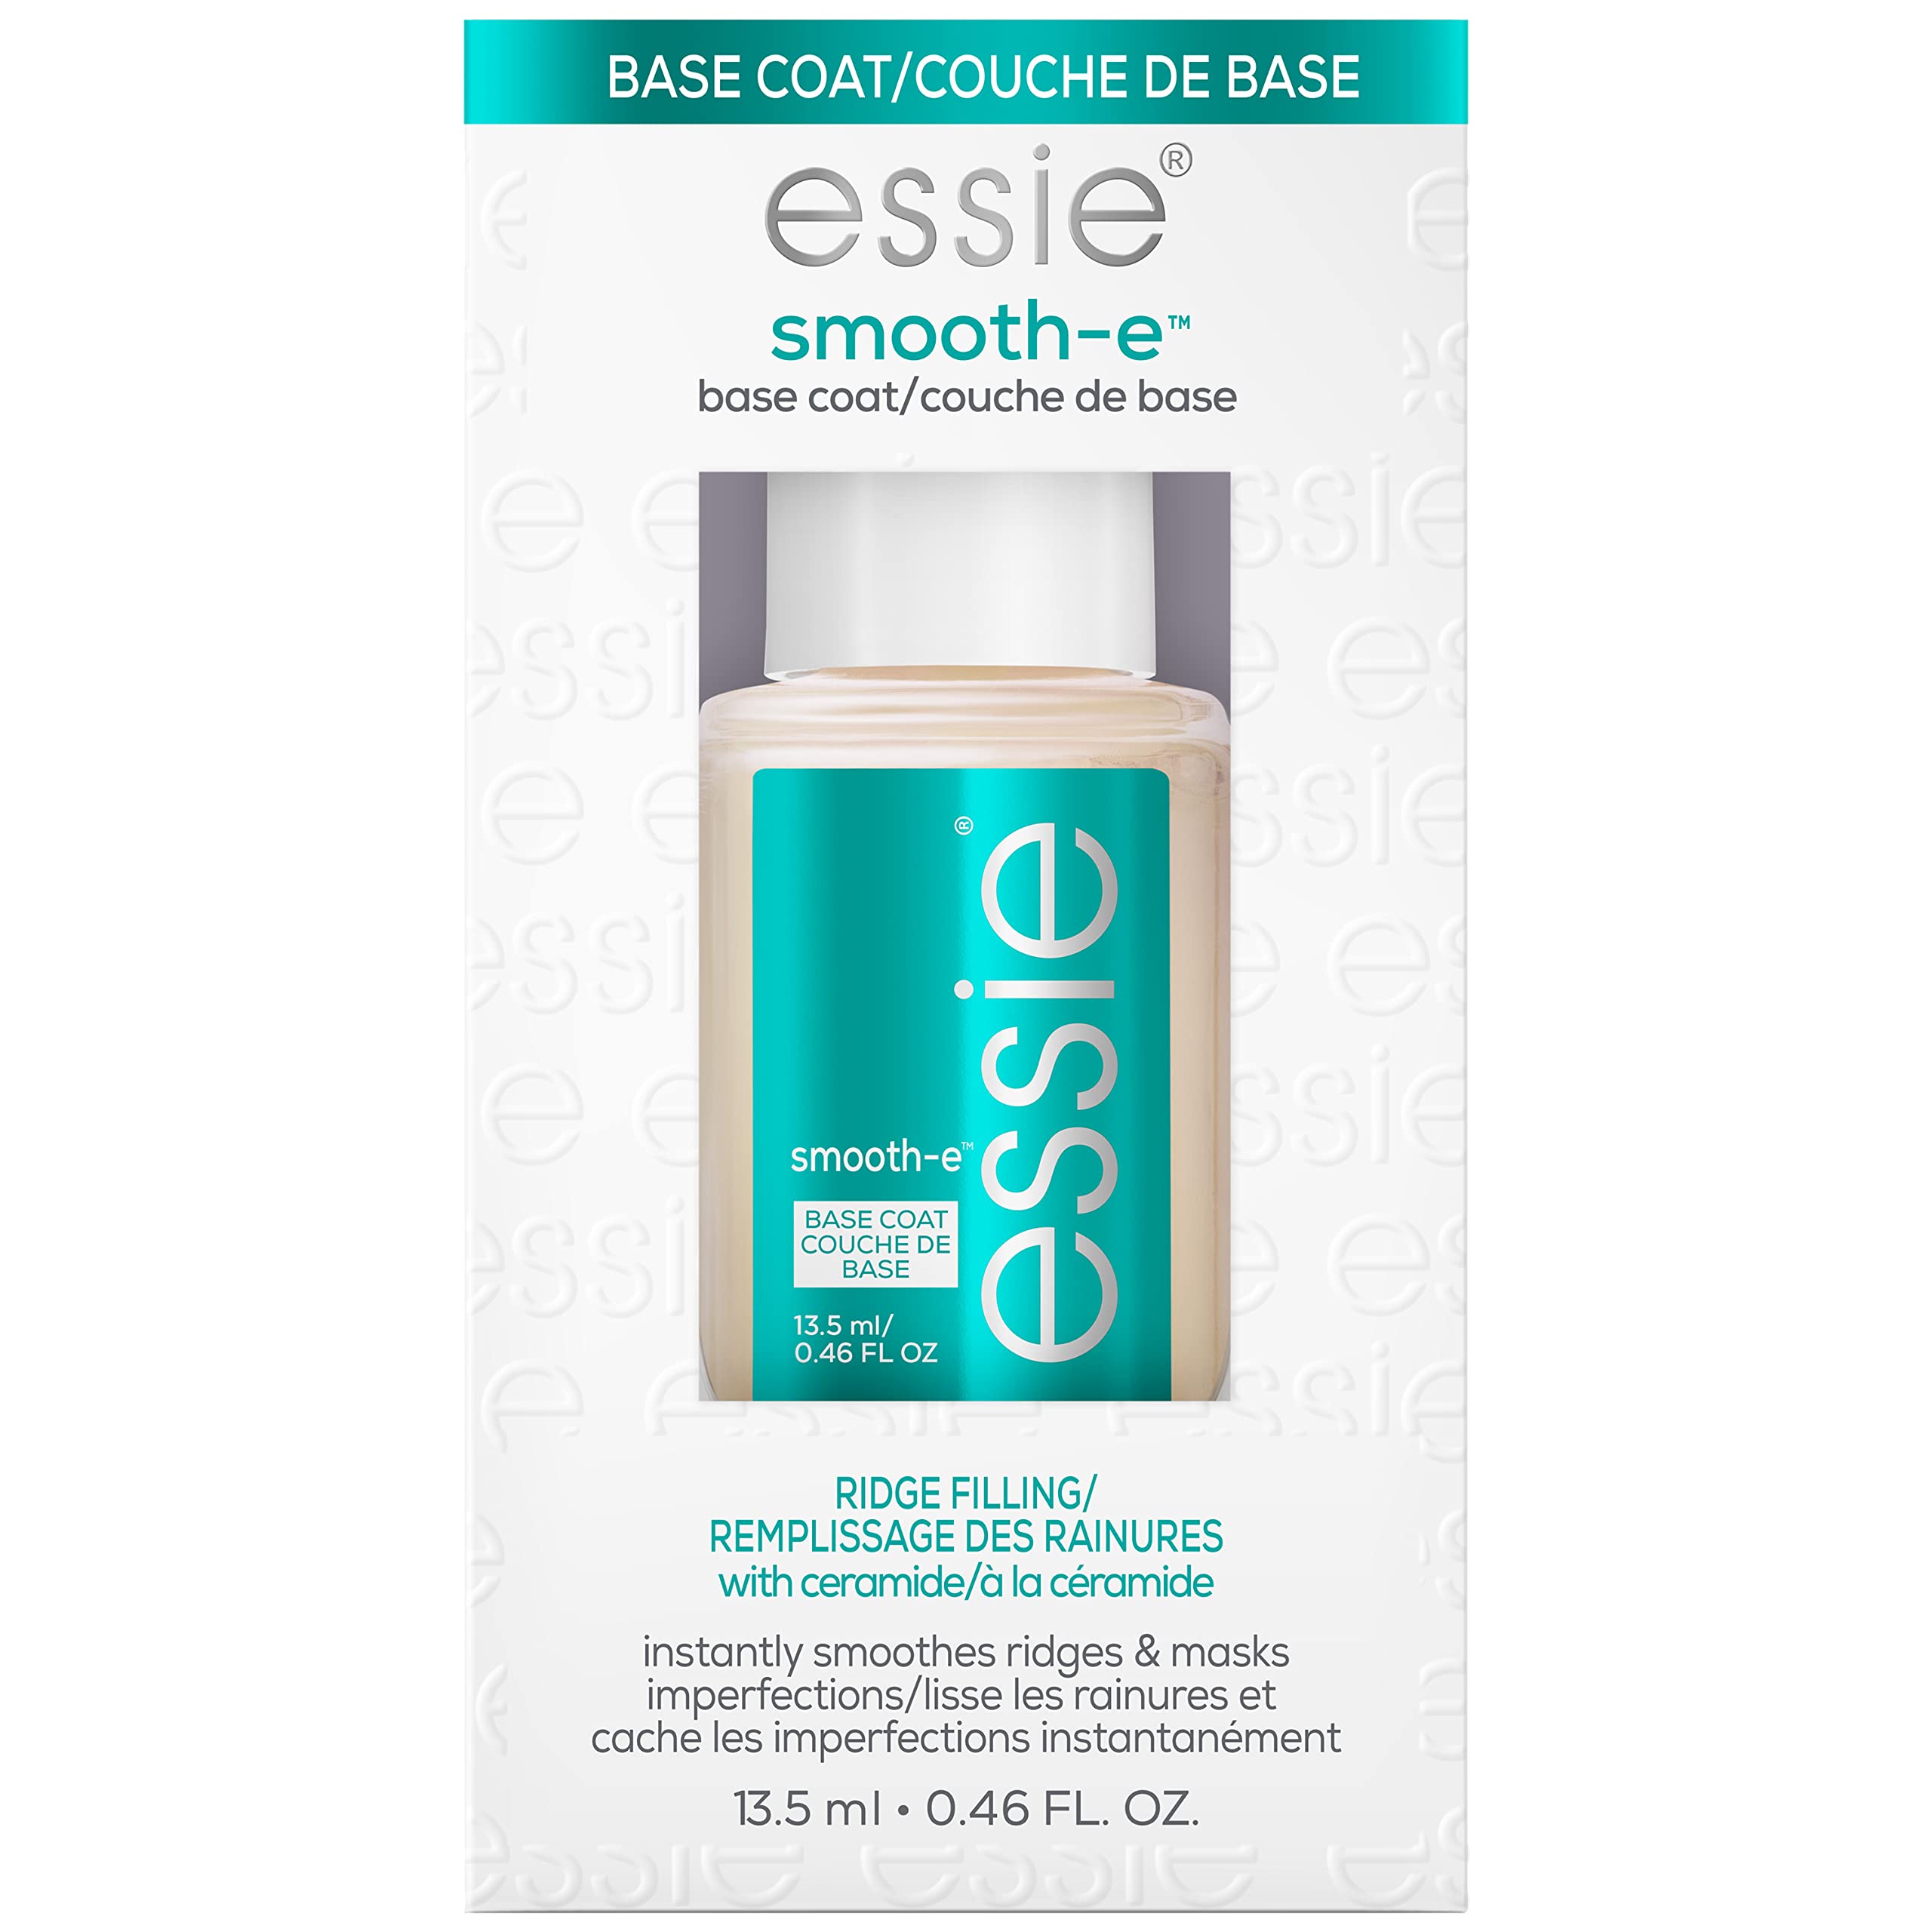 essie Nail Care, 8-Free Vegan, Smooth-E Base Coat, smoothing sleek finish nail polish, 0.46 fl oz $7.99or less w/ S&S and 20% off coupon